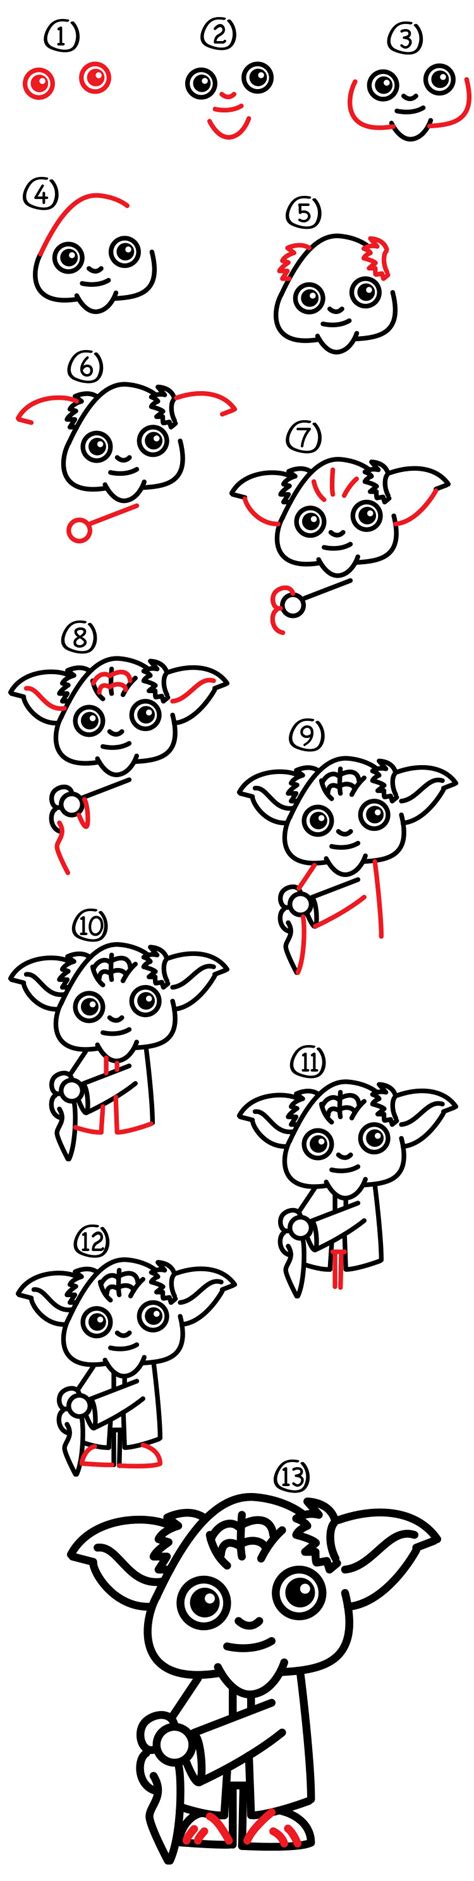 How To Draw Cartoon Yoda Art For Kids Hub